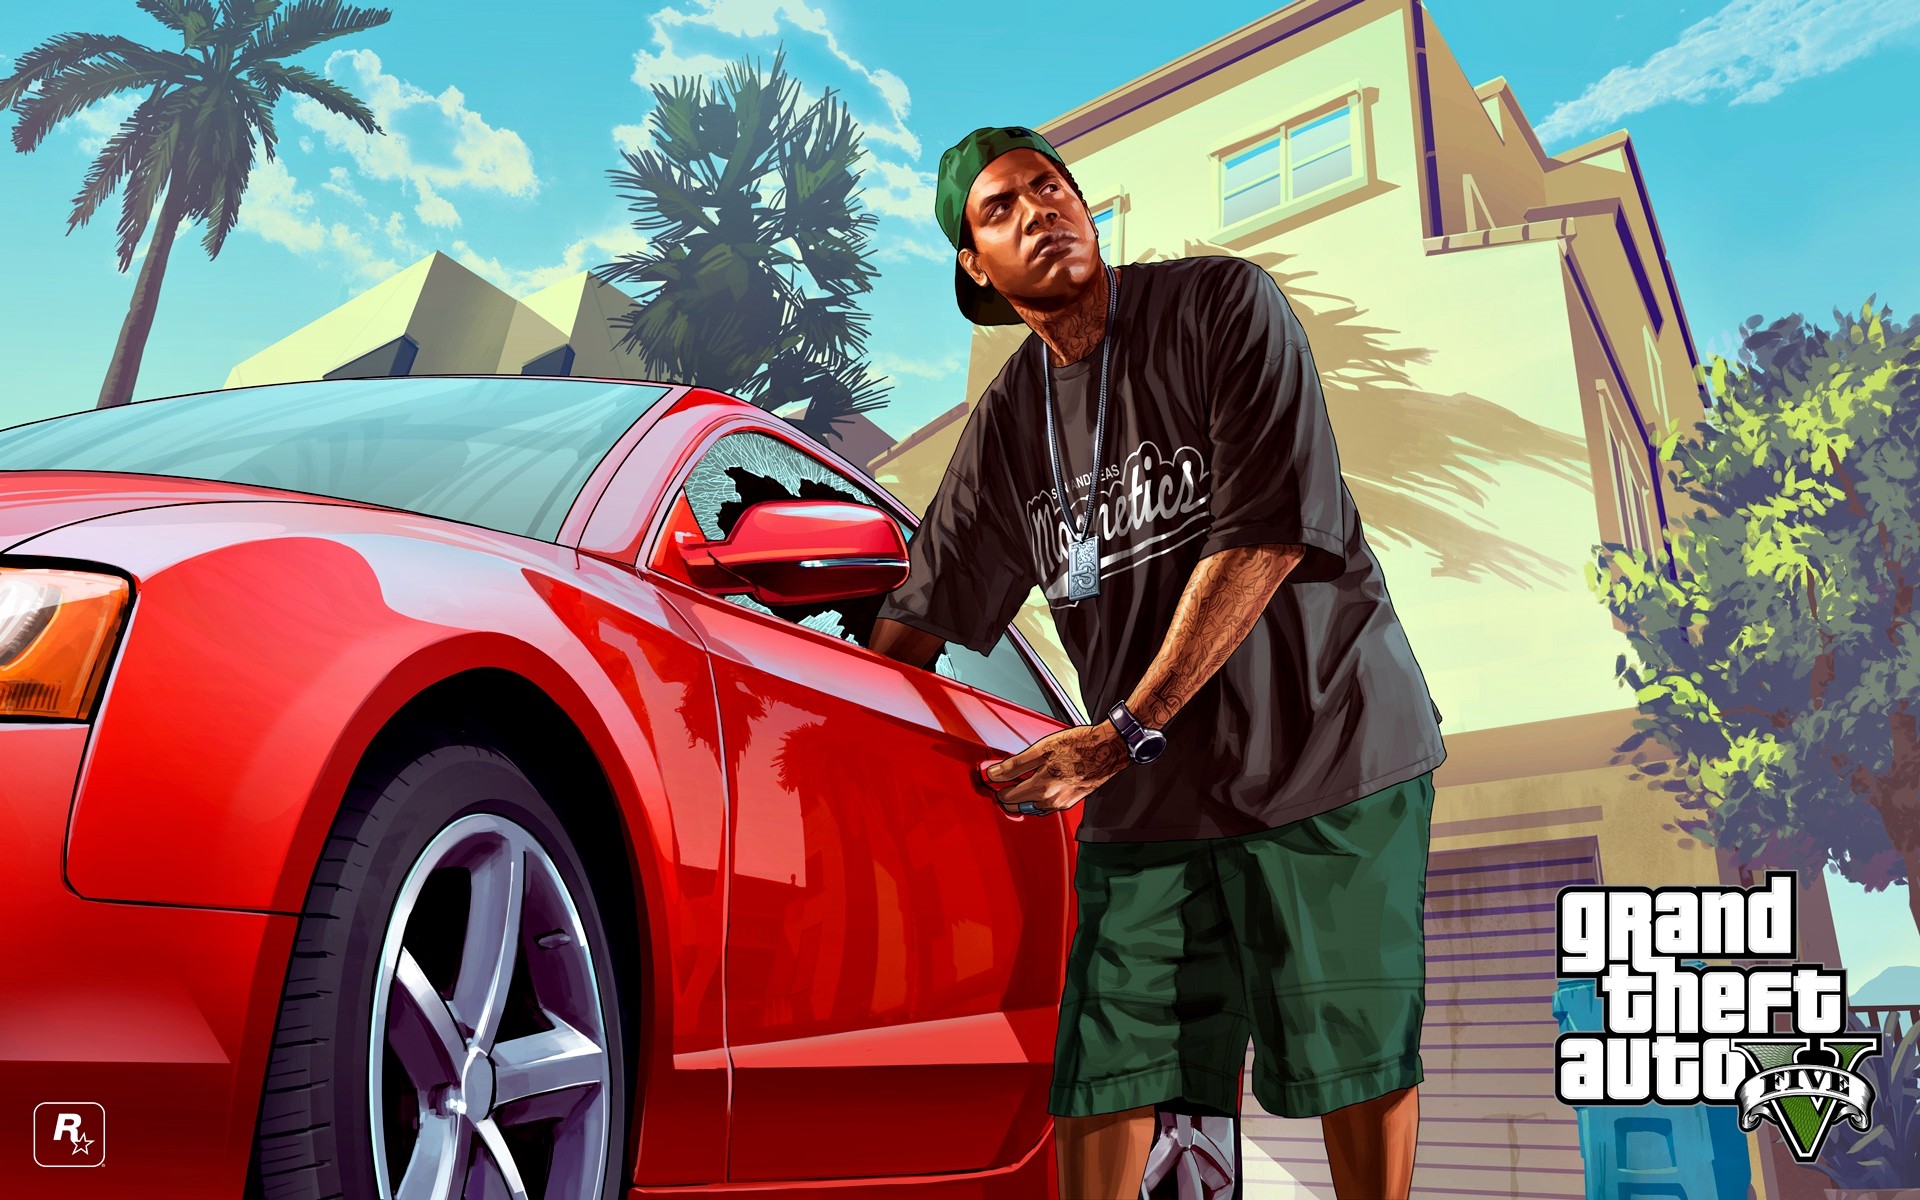 Grand Theft Auto, Grand Theft Auto V Wallpaper